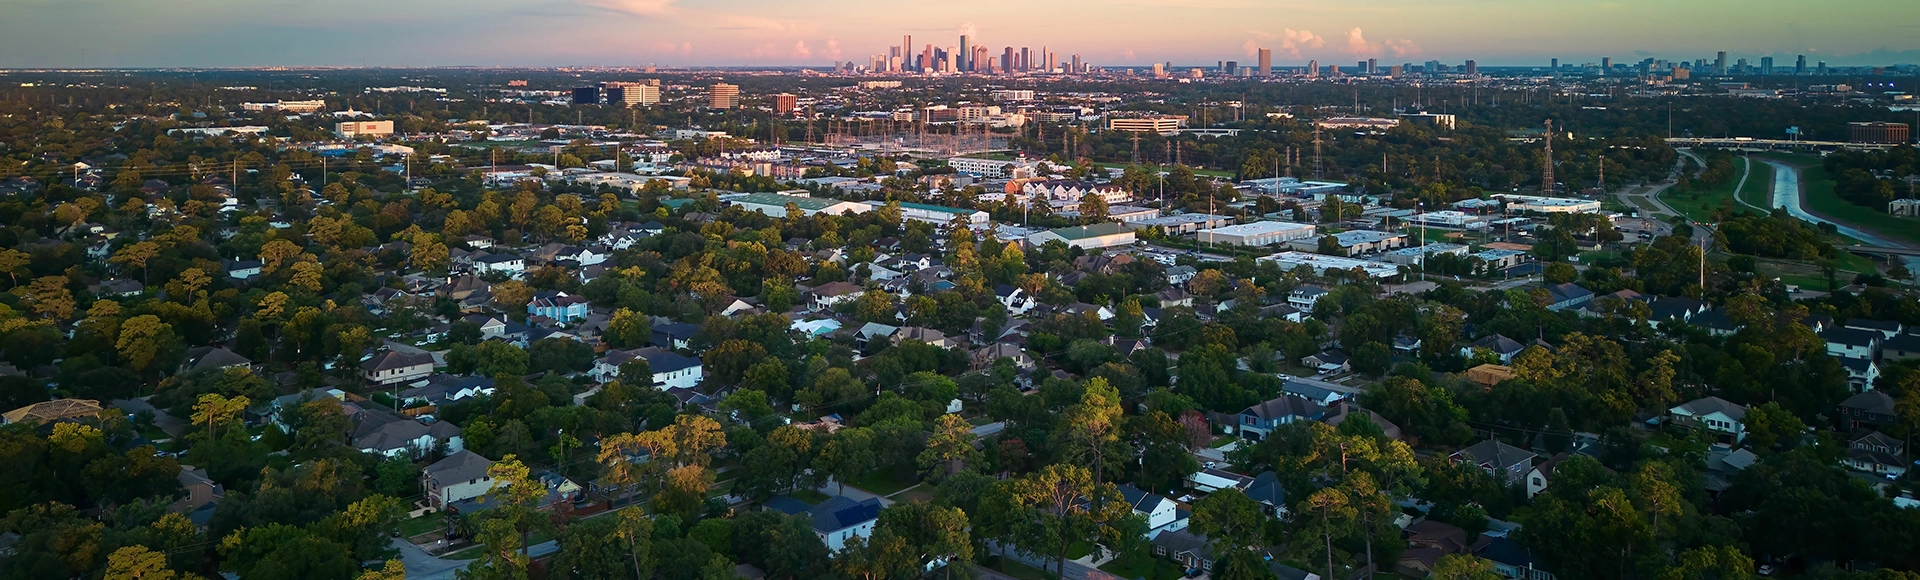 Horizontal aerial view of Houston, Texas skyline from a suburban neighborhood under blue sky